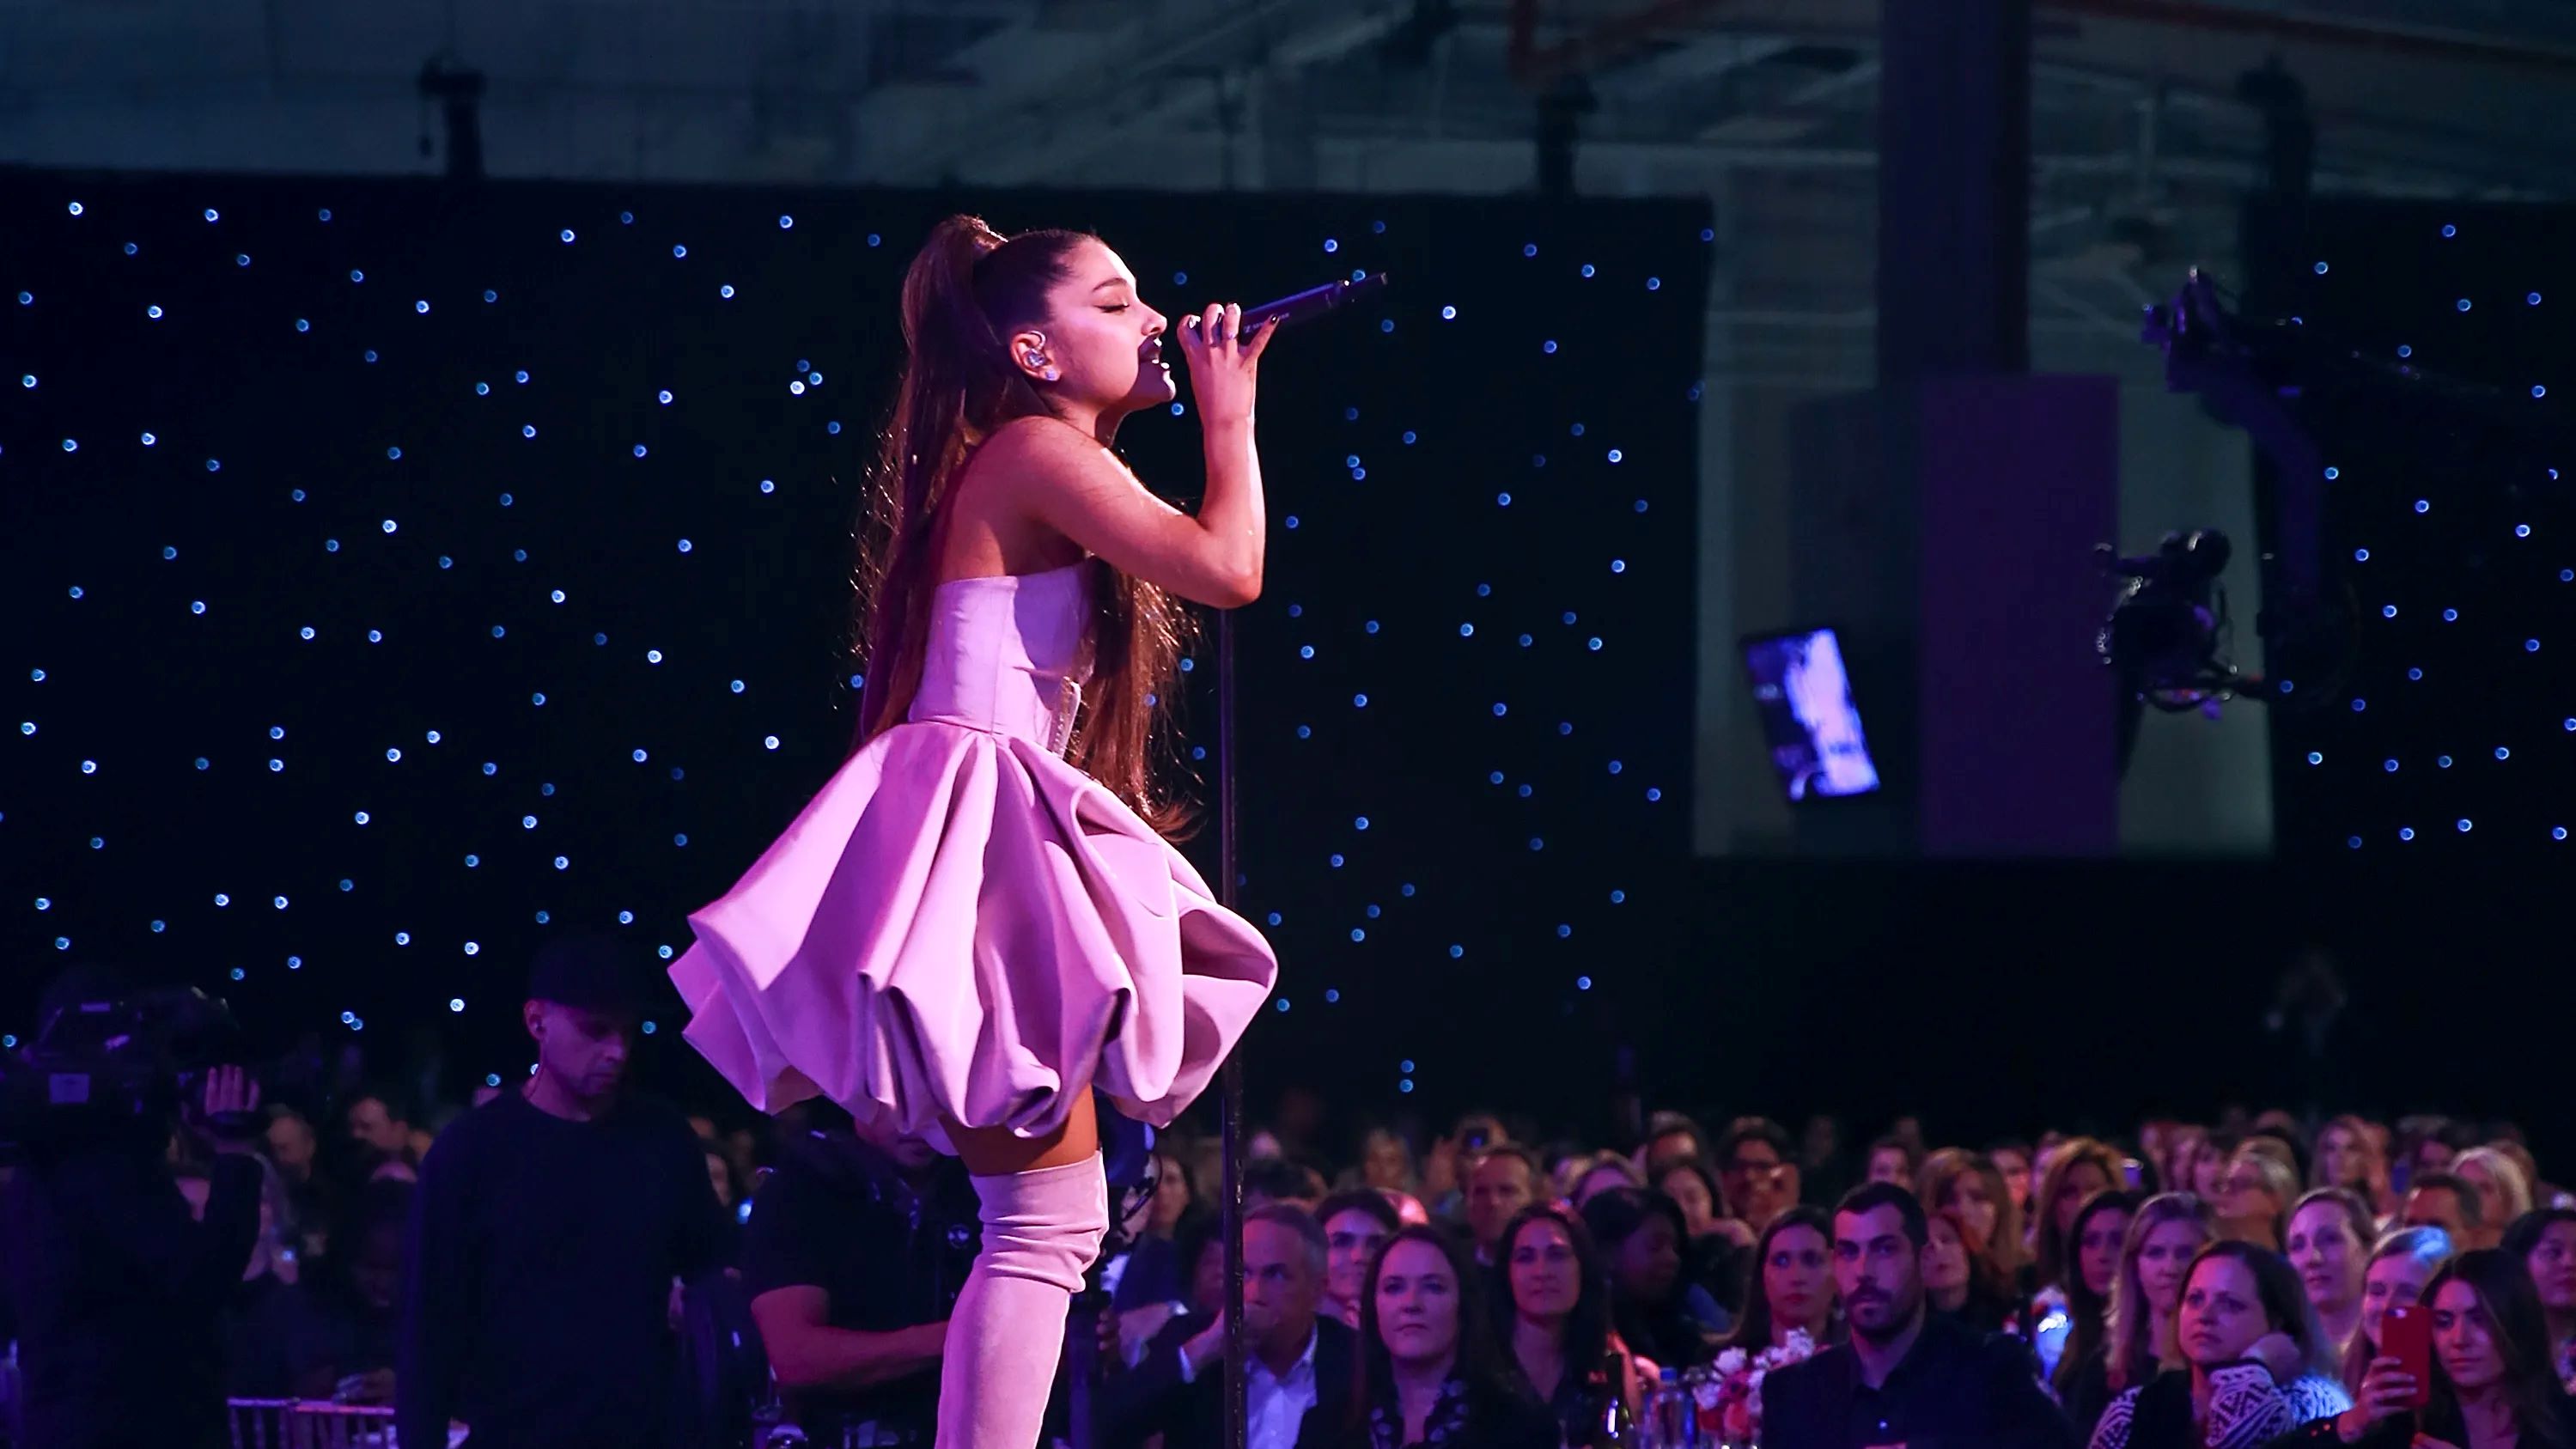 Ariana Grande's Onstage Fashion: A Creative Fashion Extravaganza!